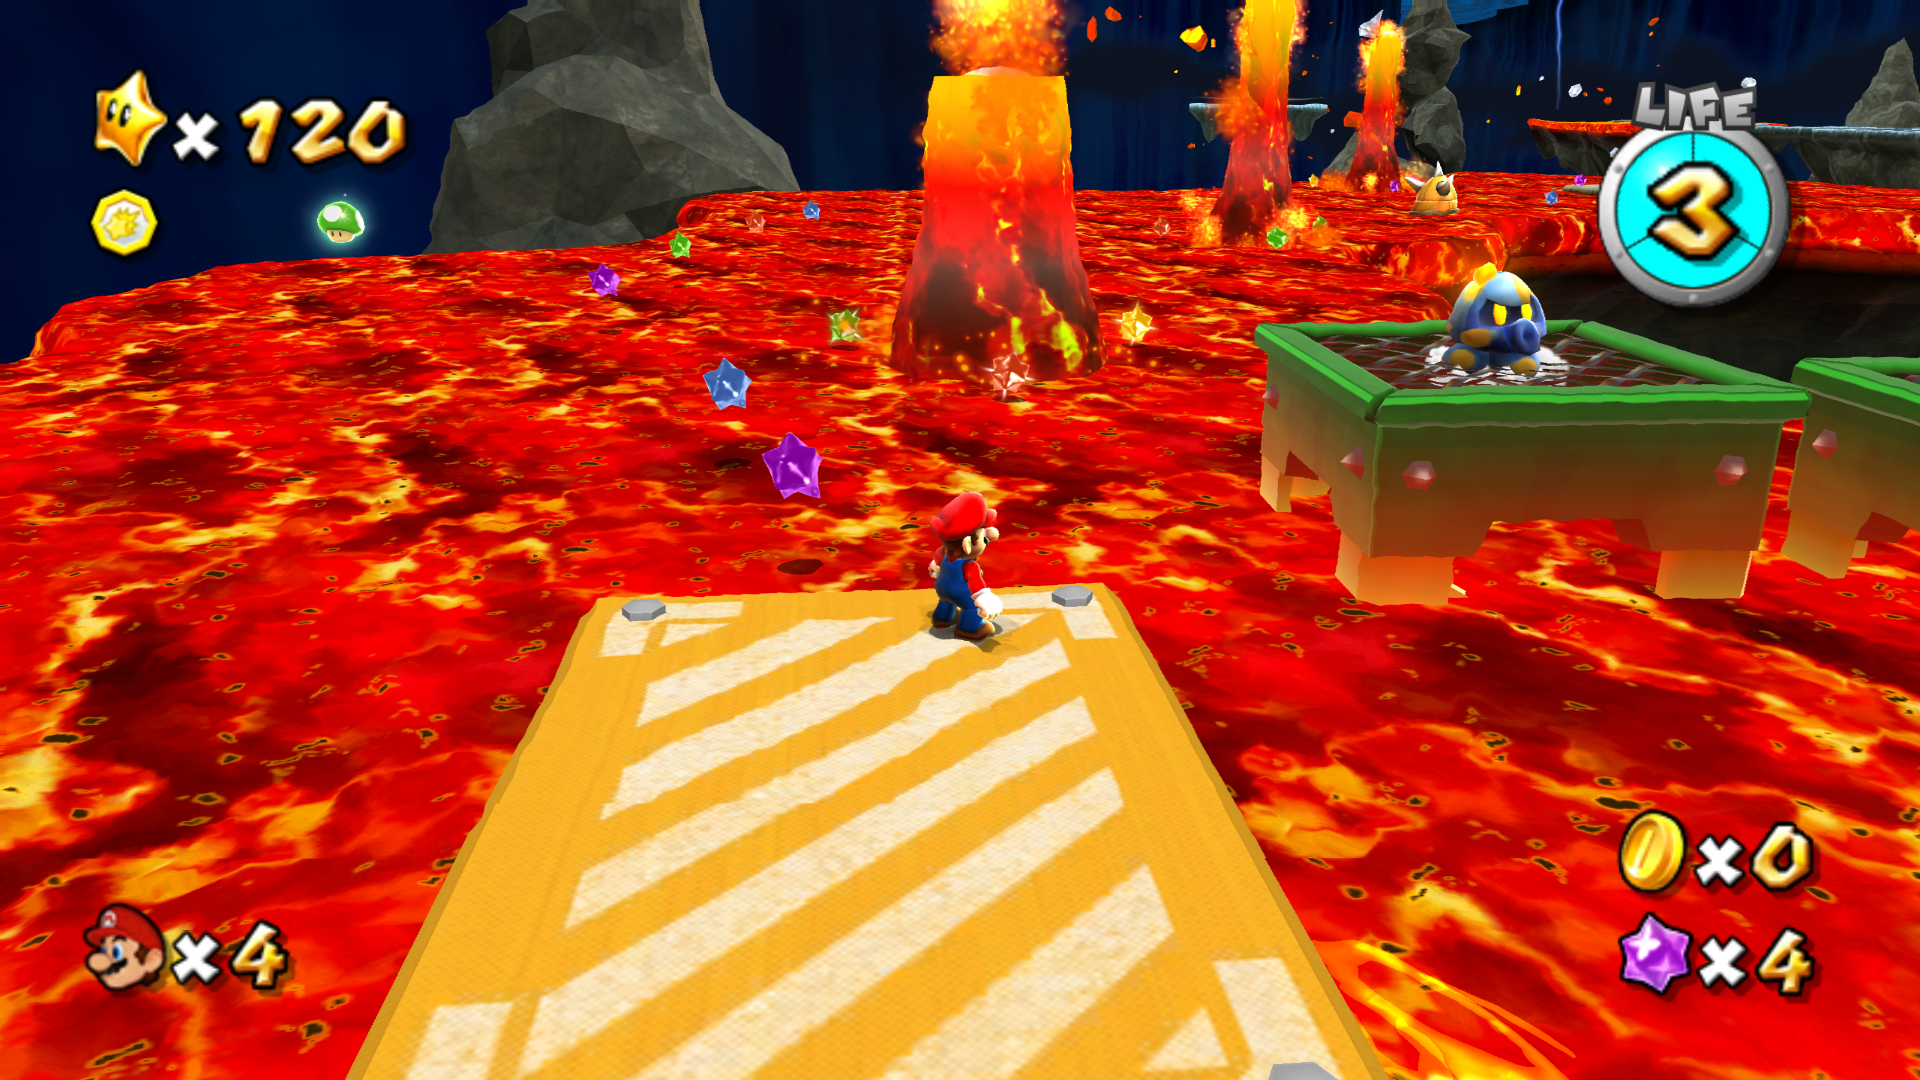 Mario rides over lava in HD emulated Mario Galaxy 2